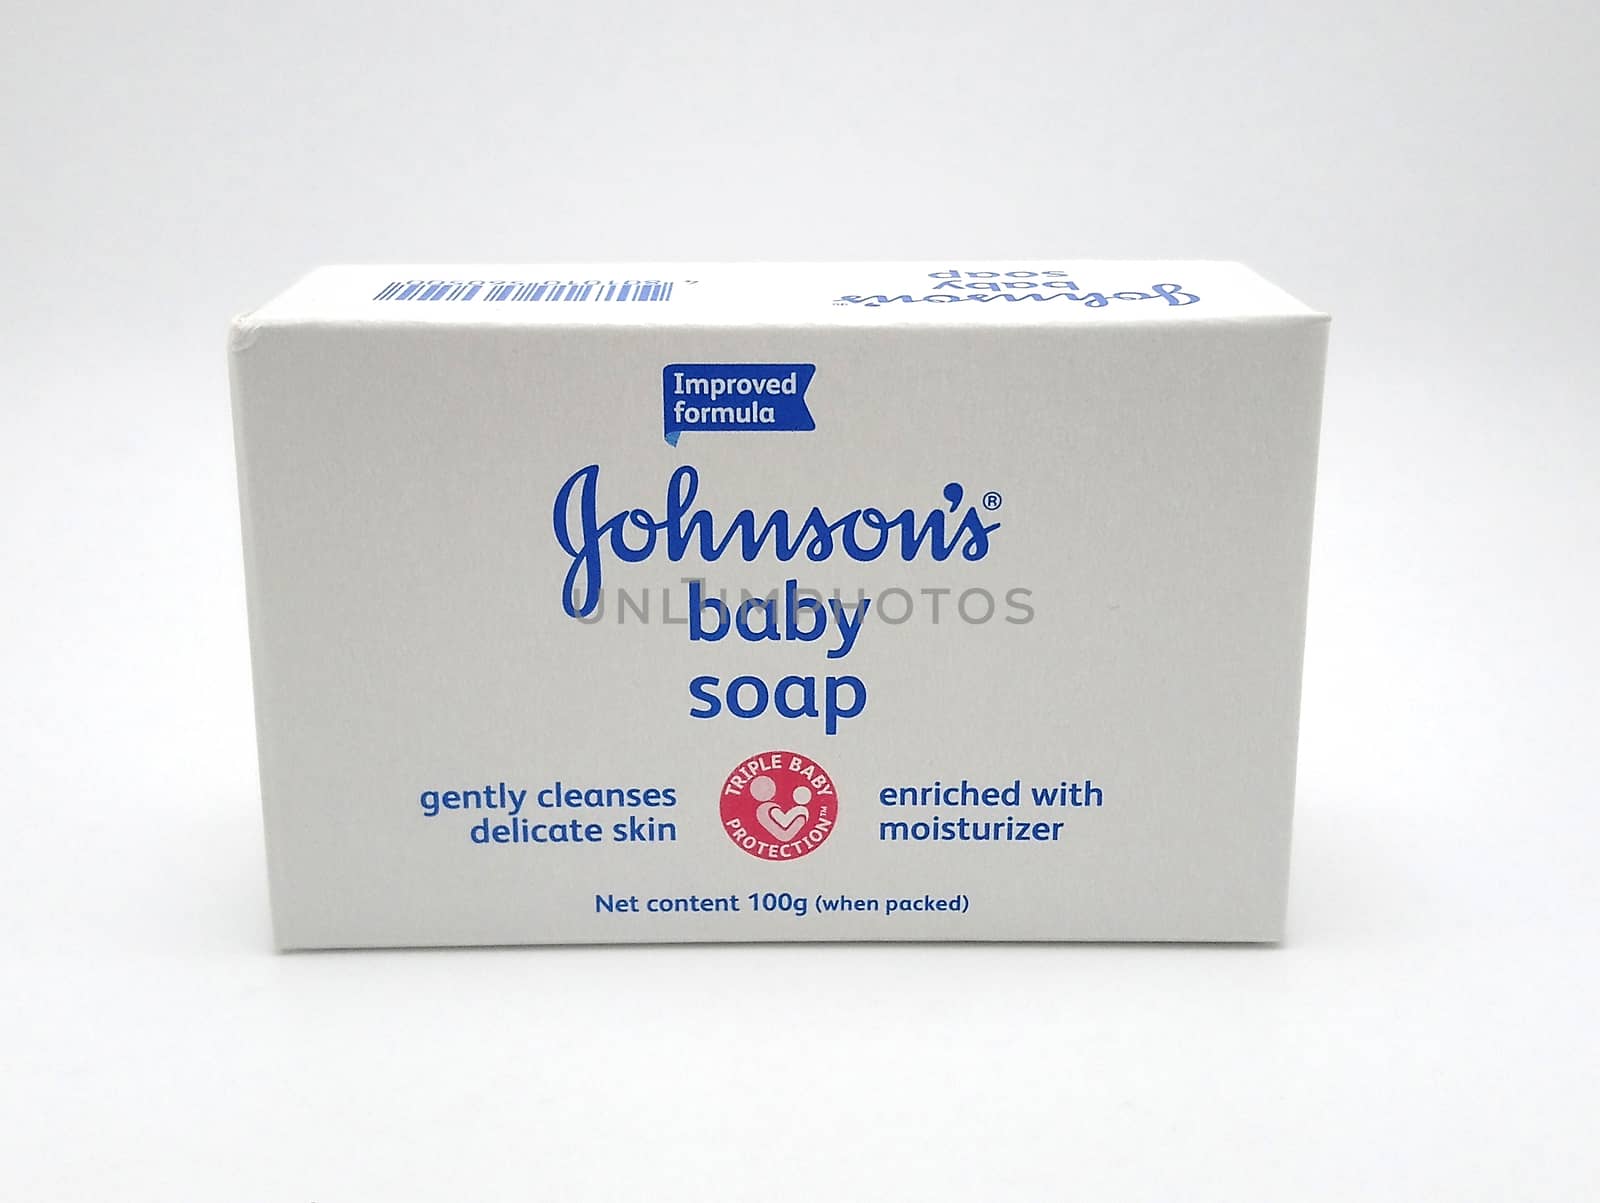 Johnsons baby soap box in Manila, Philippines by imwaltersy